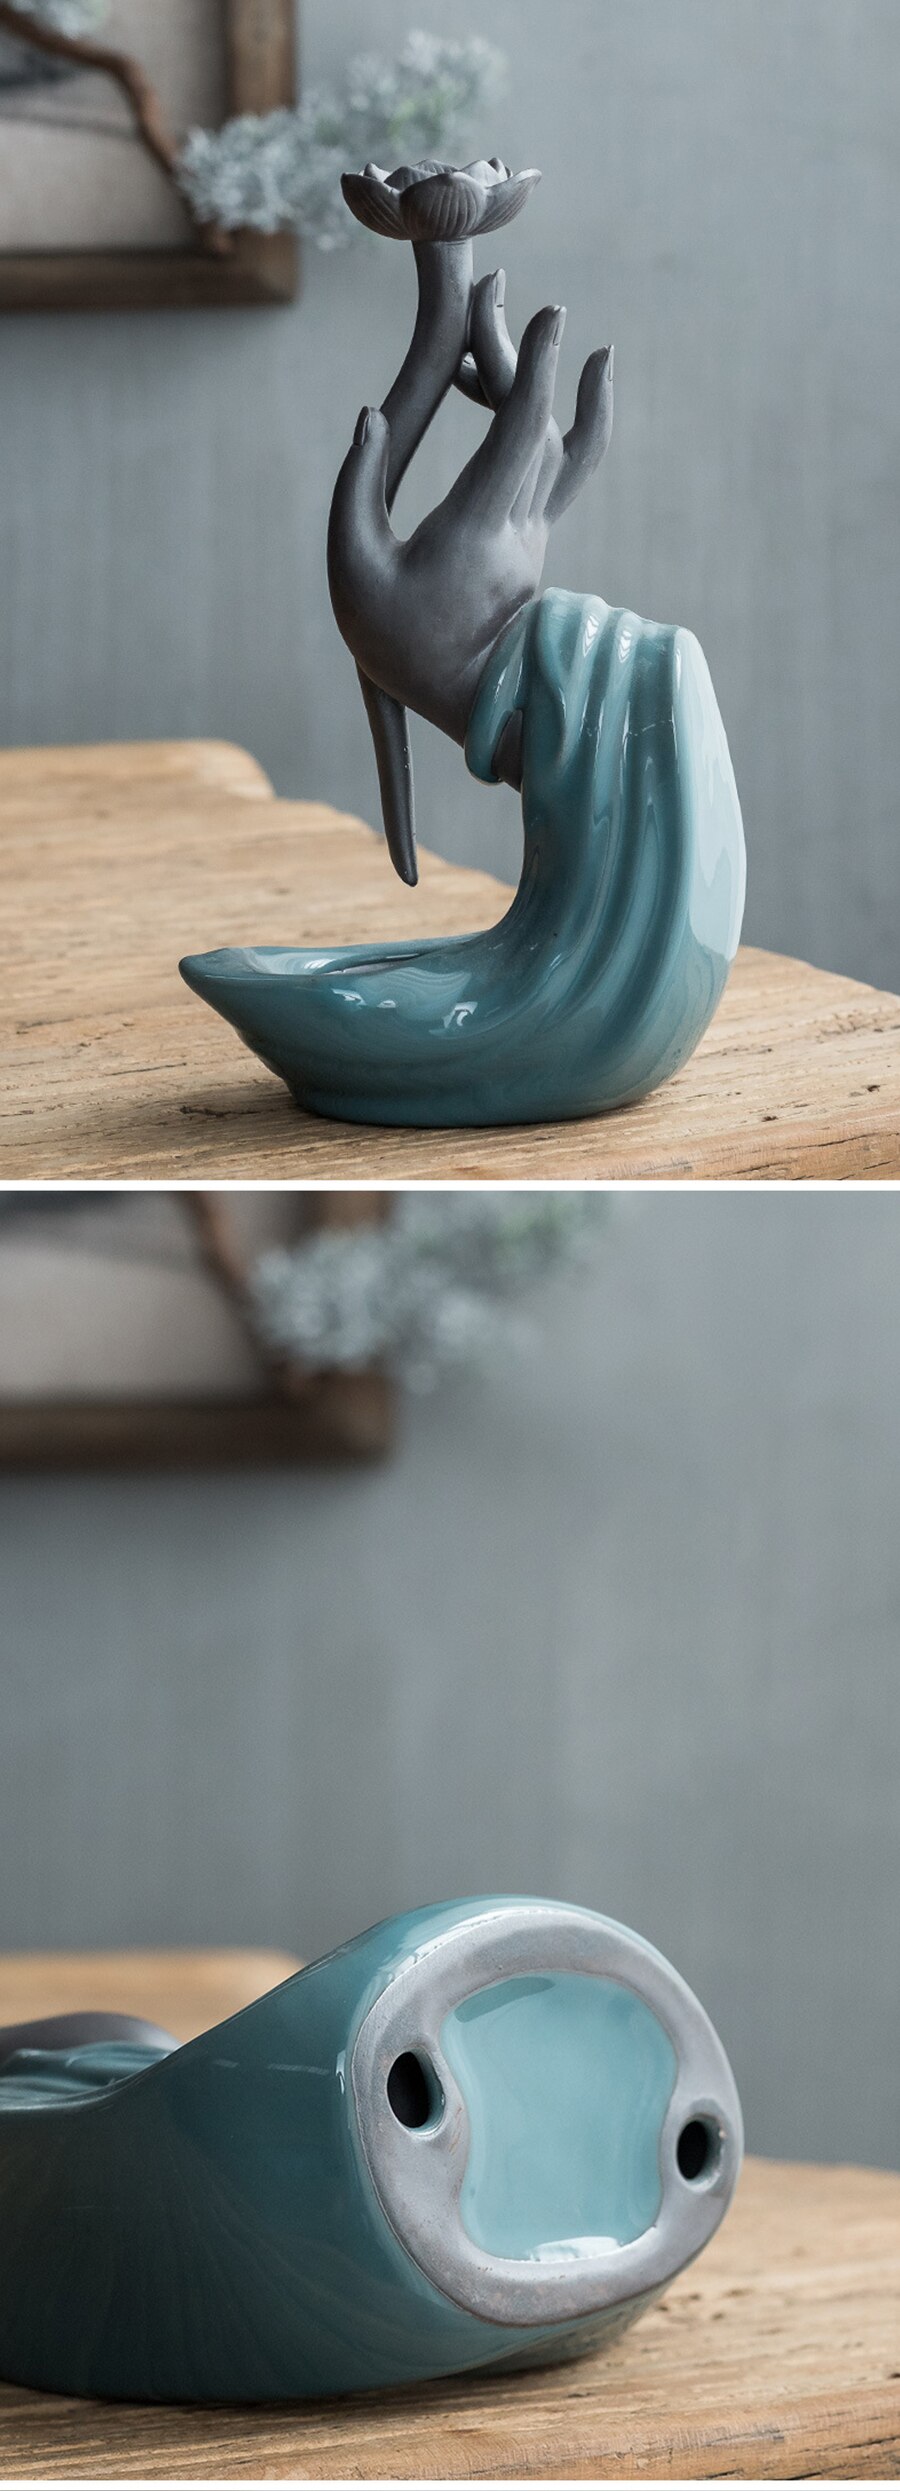 Flower Mountain River Handicraft Incense Holder Ceramic Backflow Waterfall Smoke Sleep aid Incense Burner Home Decor